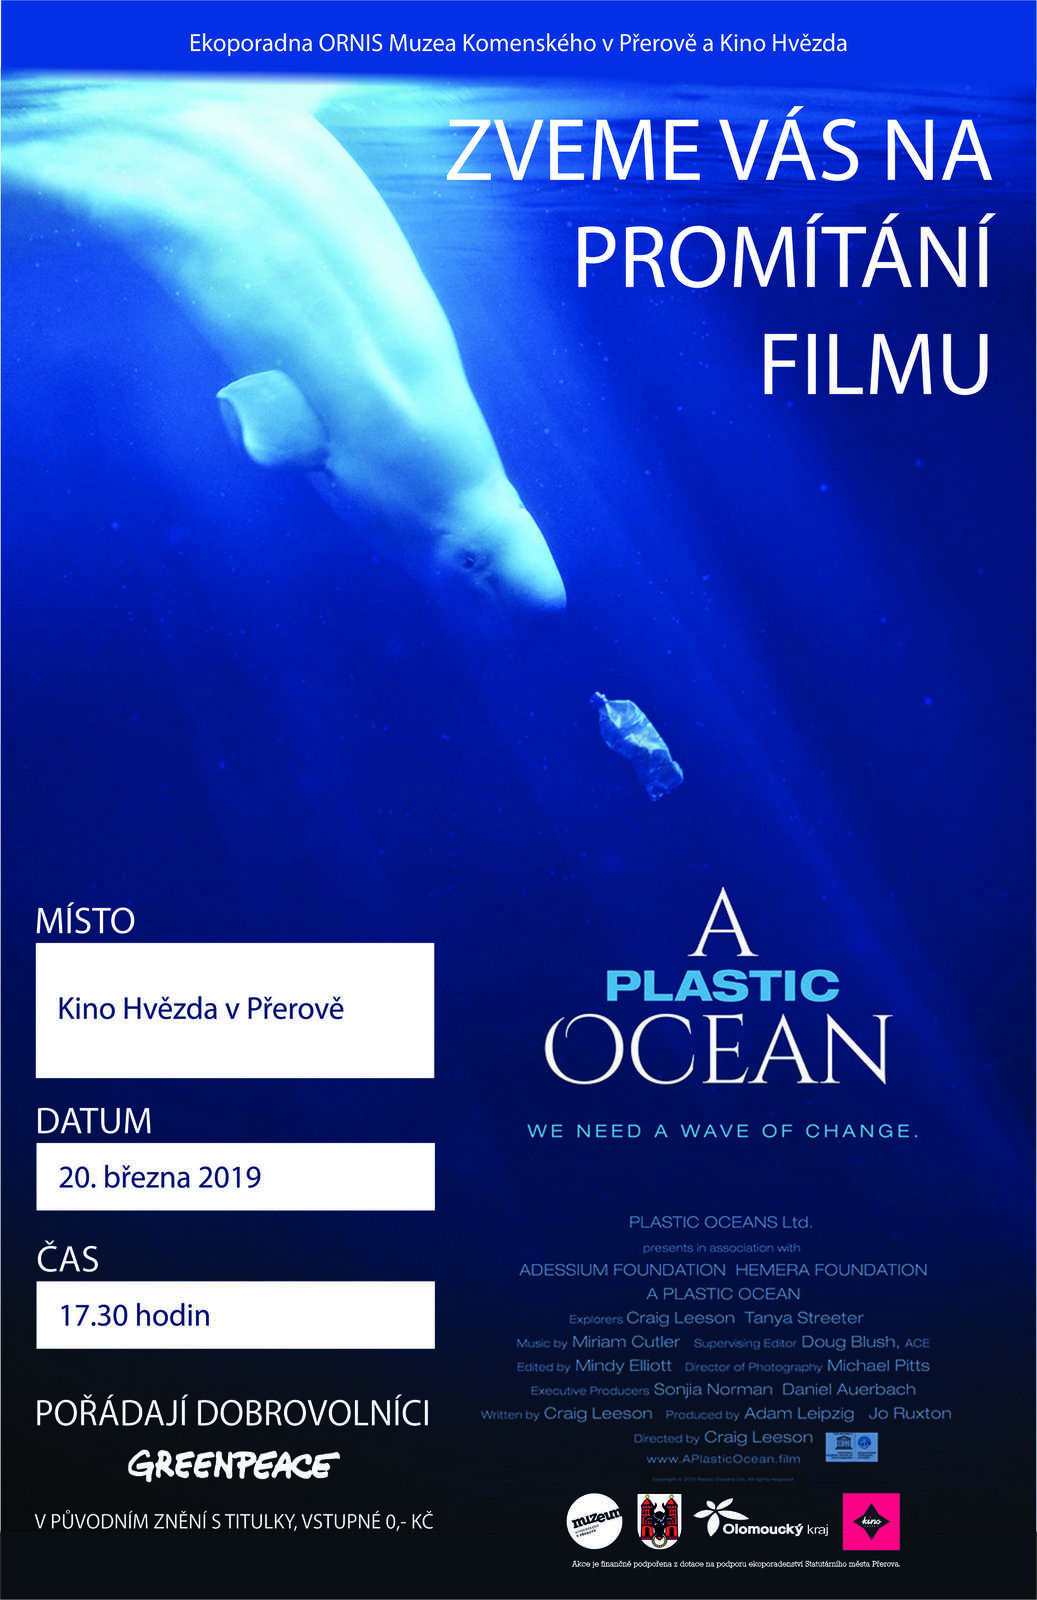 A plastic ocean_1.jpg